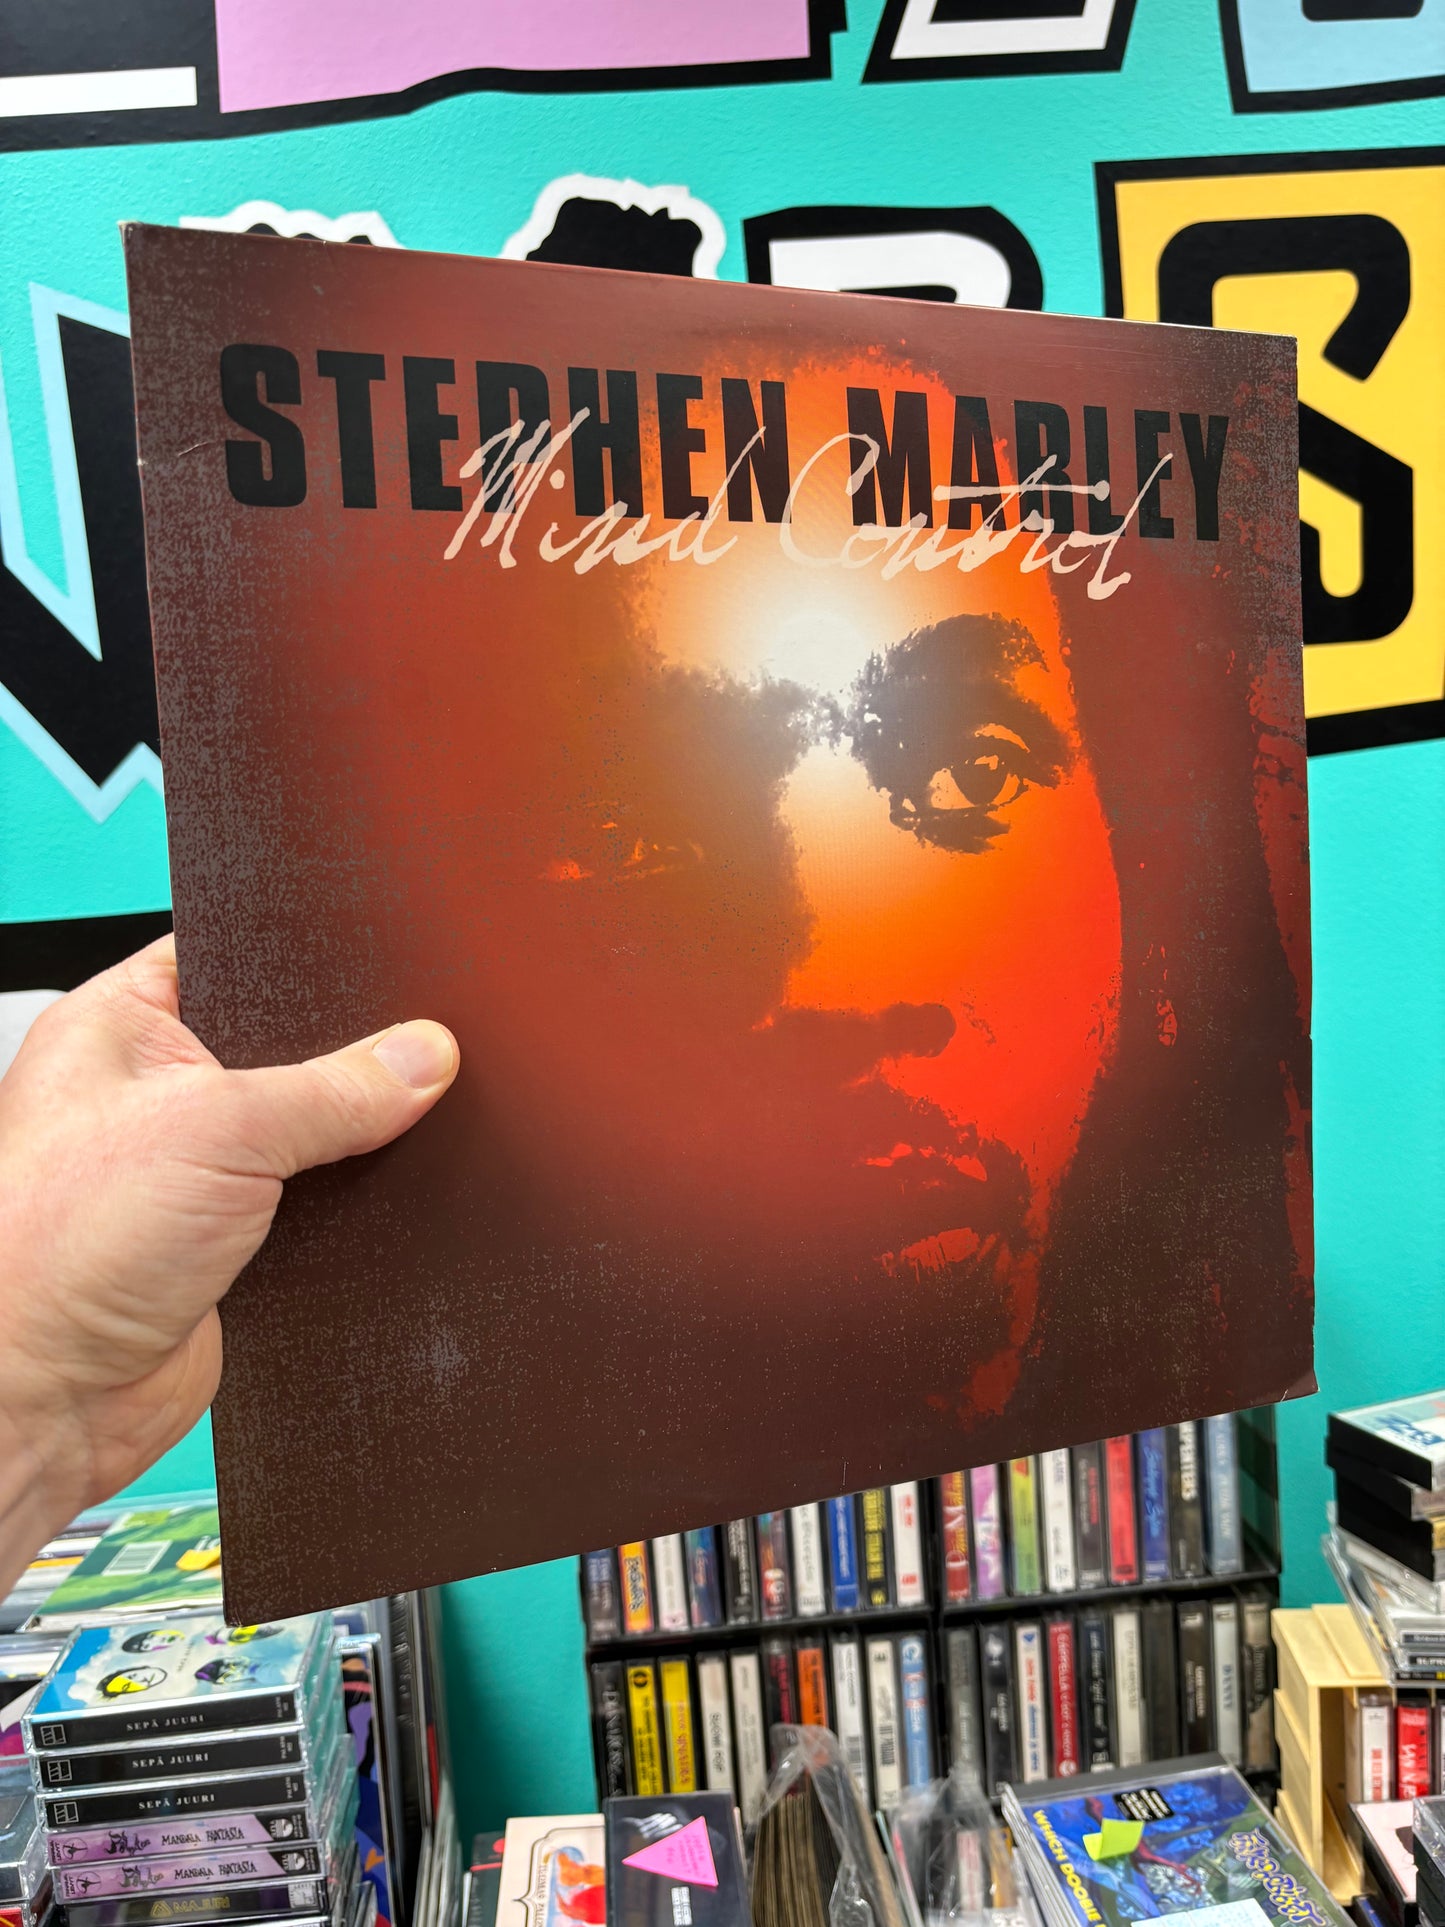 Stephen Marley: Mind Control, 2LP, Only vinyl pressing, US 2007